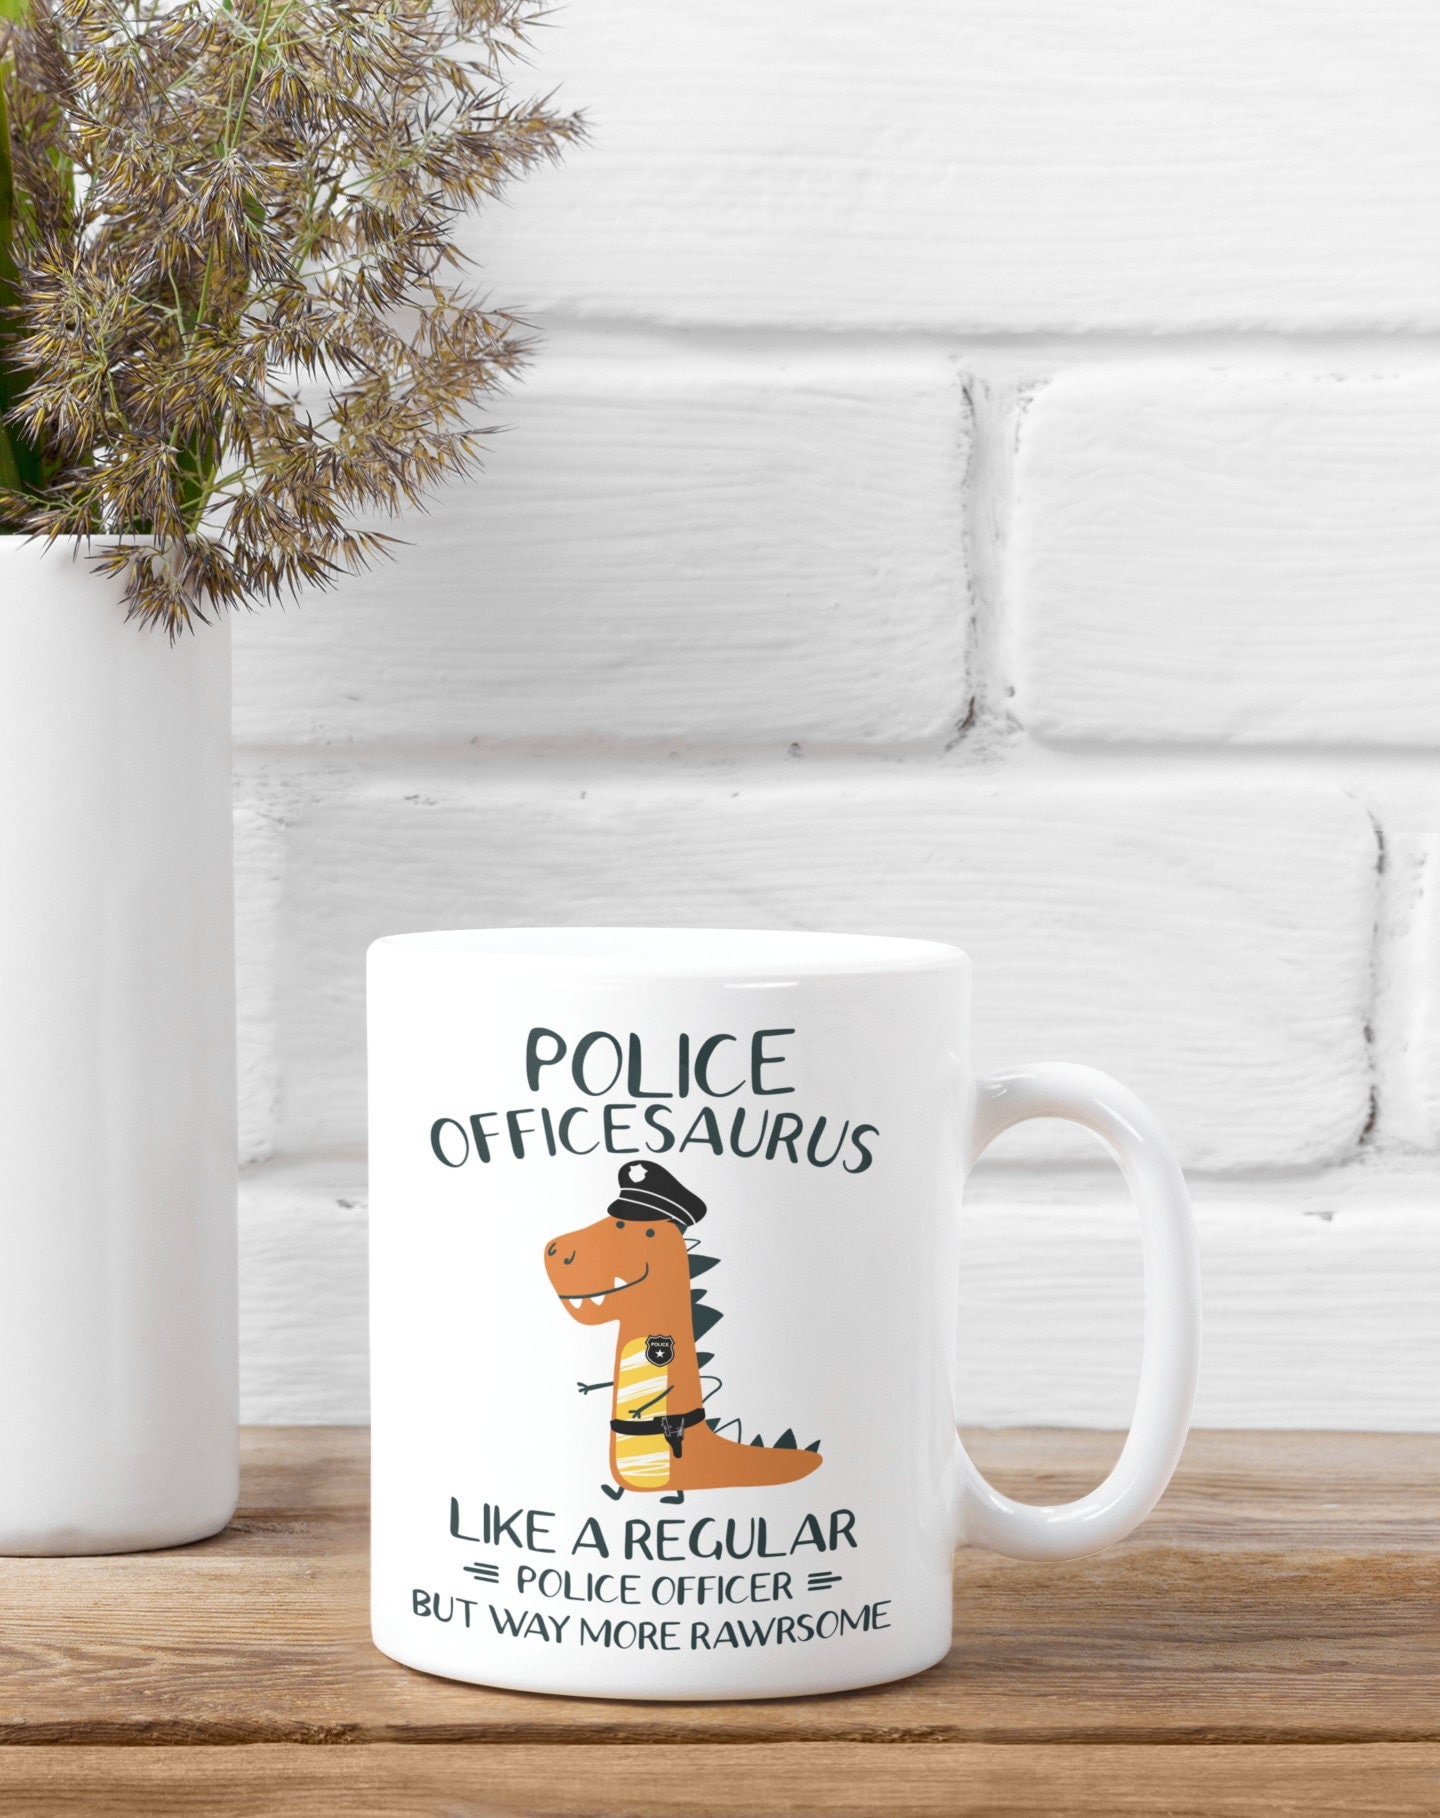 Cop Gifts - Other Cops You Funny Unicorn Coffee Mug - RANSALEX